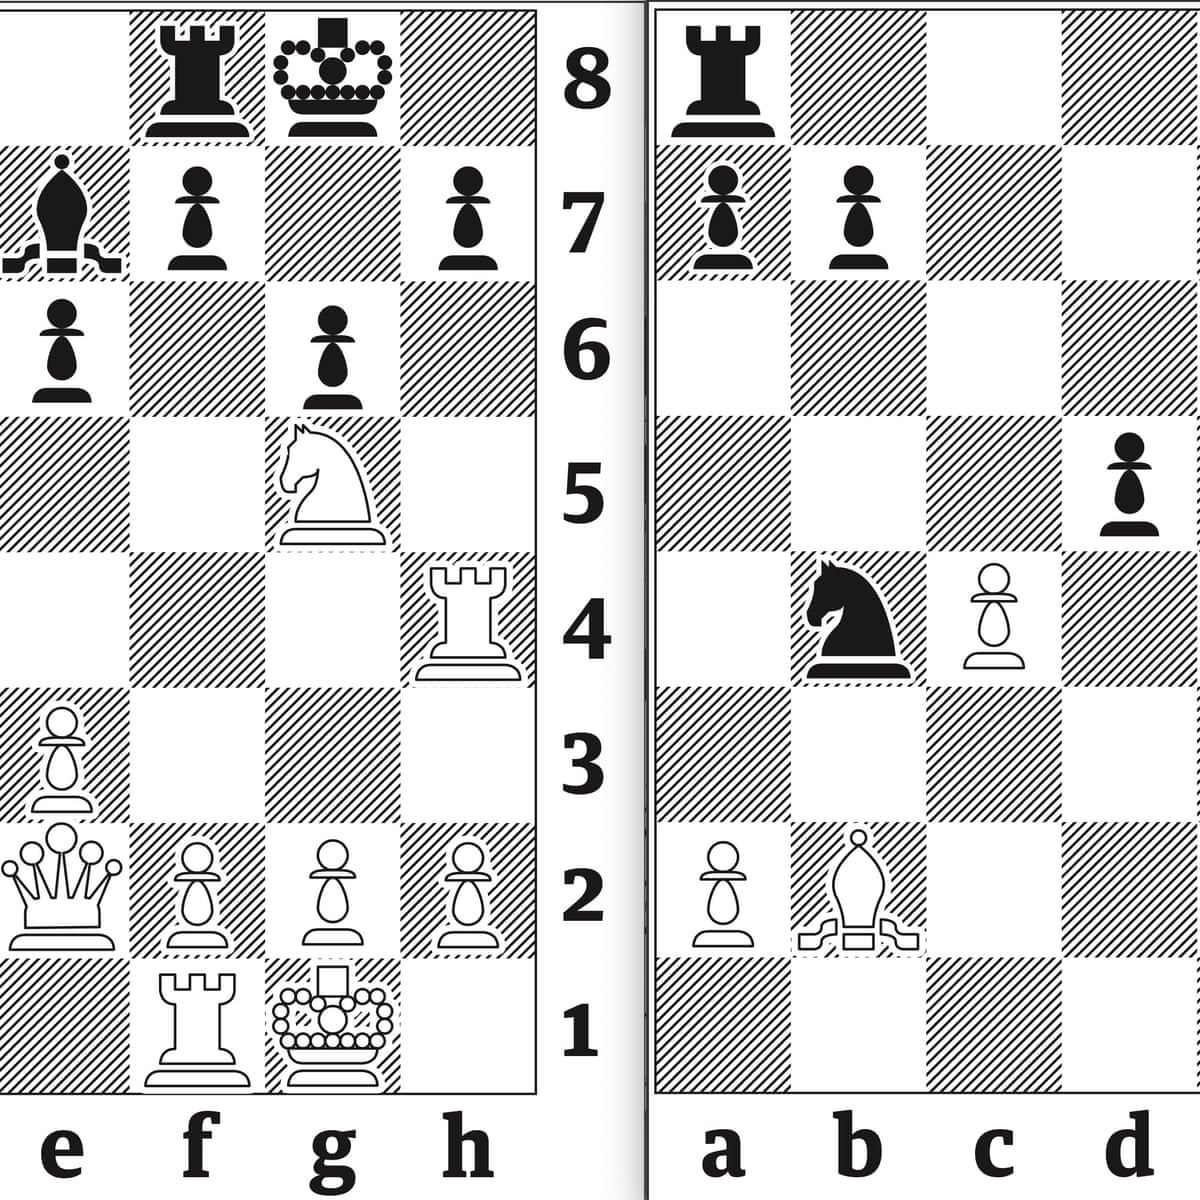 Chess: Magnus Carlsen captures double world crown in Rapid and Blitz, Magnus Carlsen